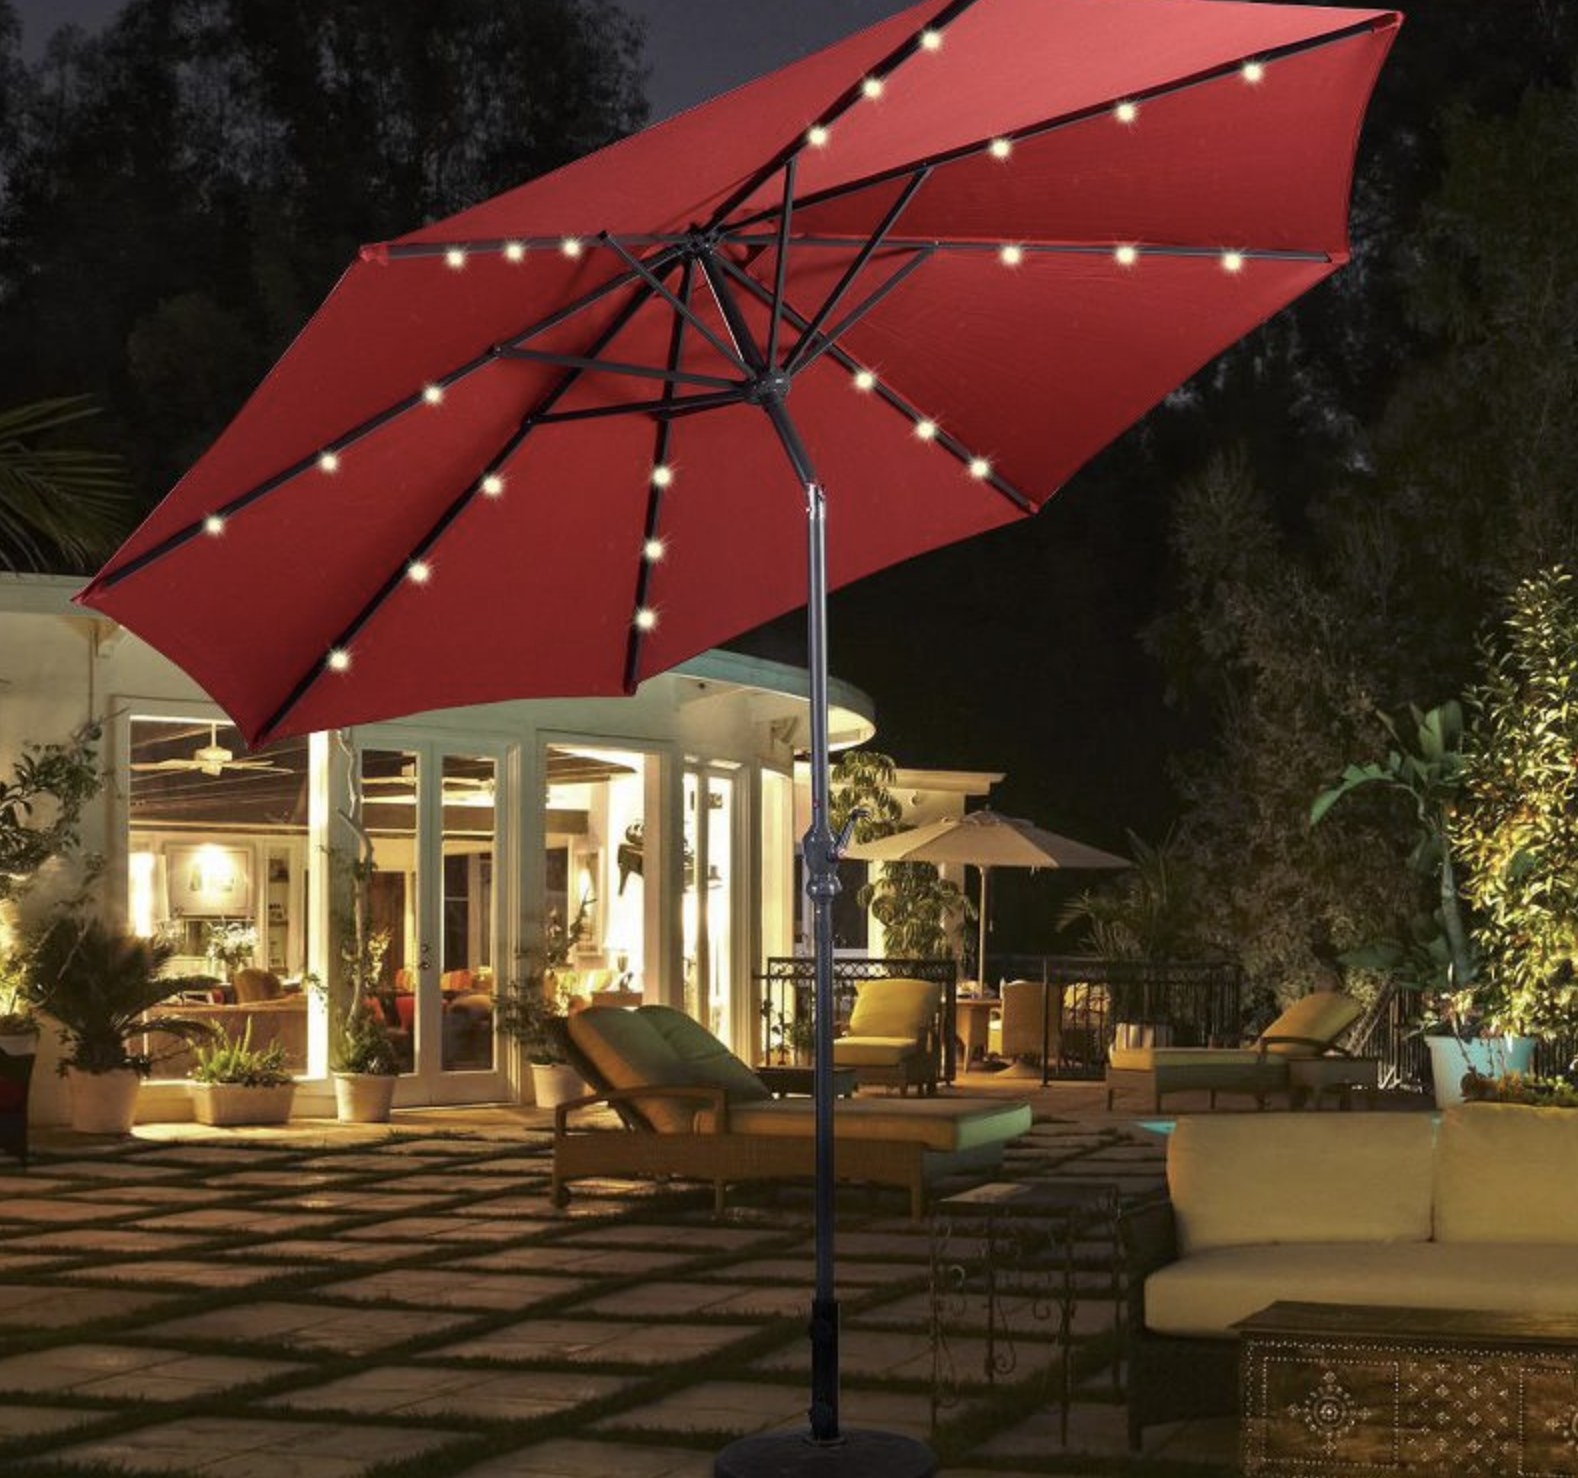 LED umbrella in red in a backyard